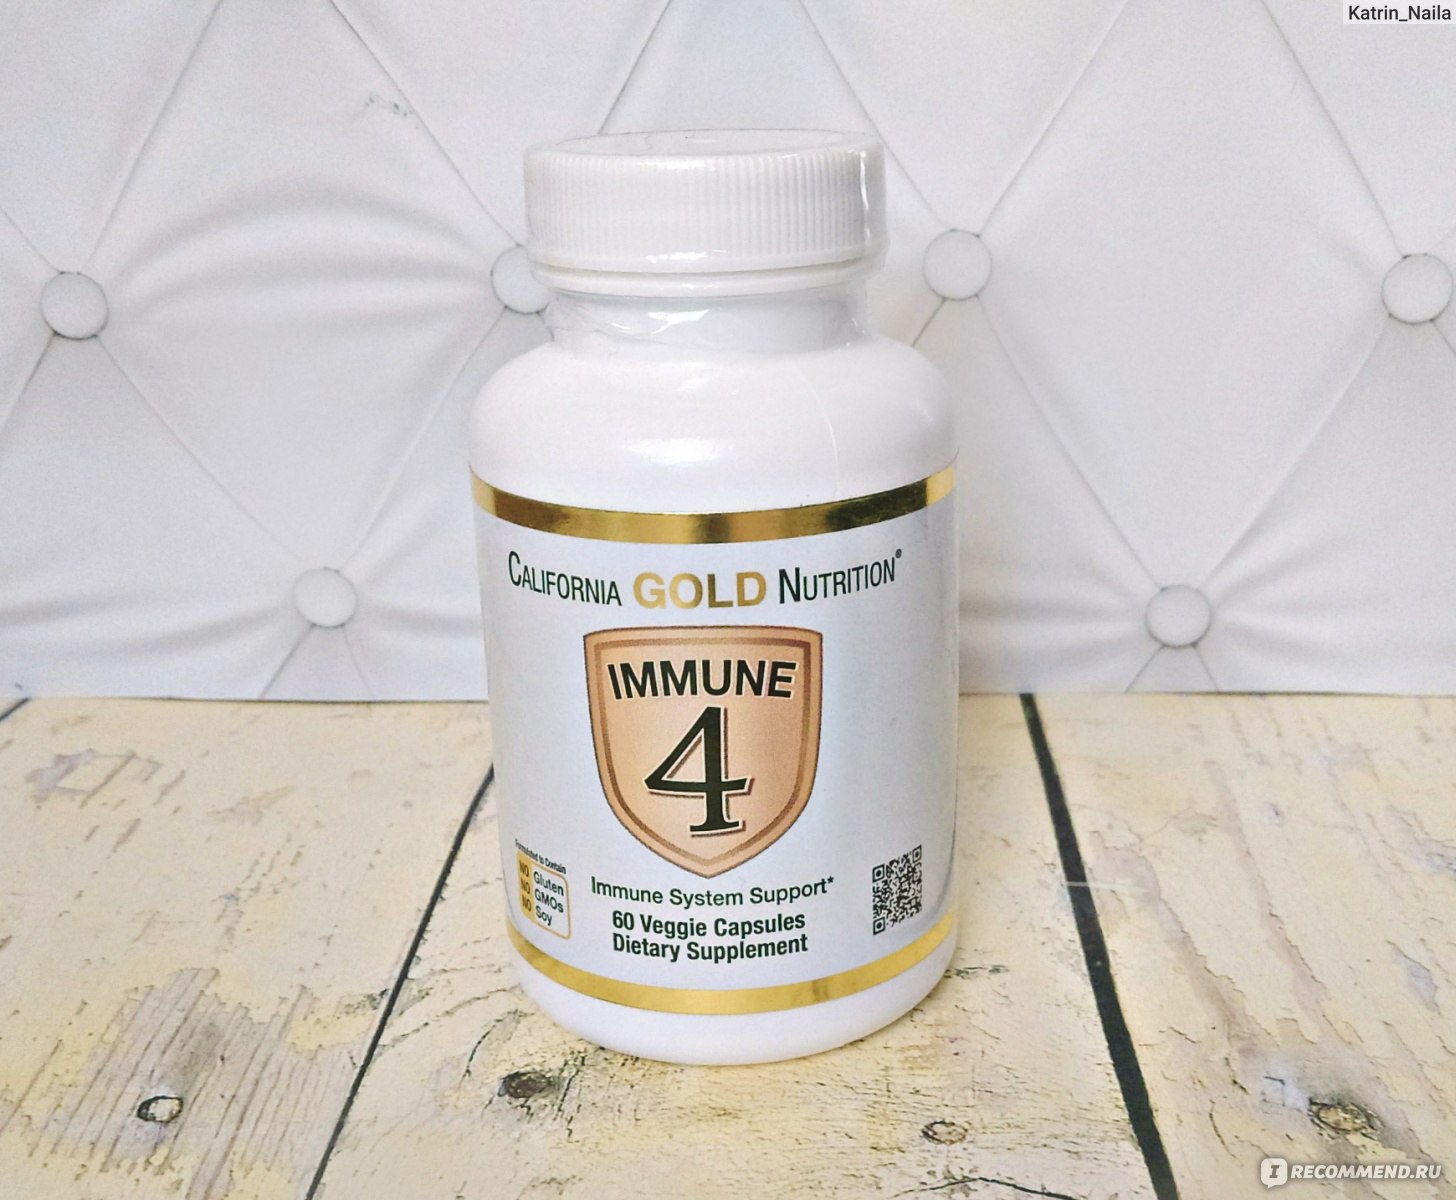 Gold nutrition immune 4